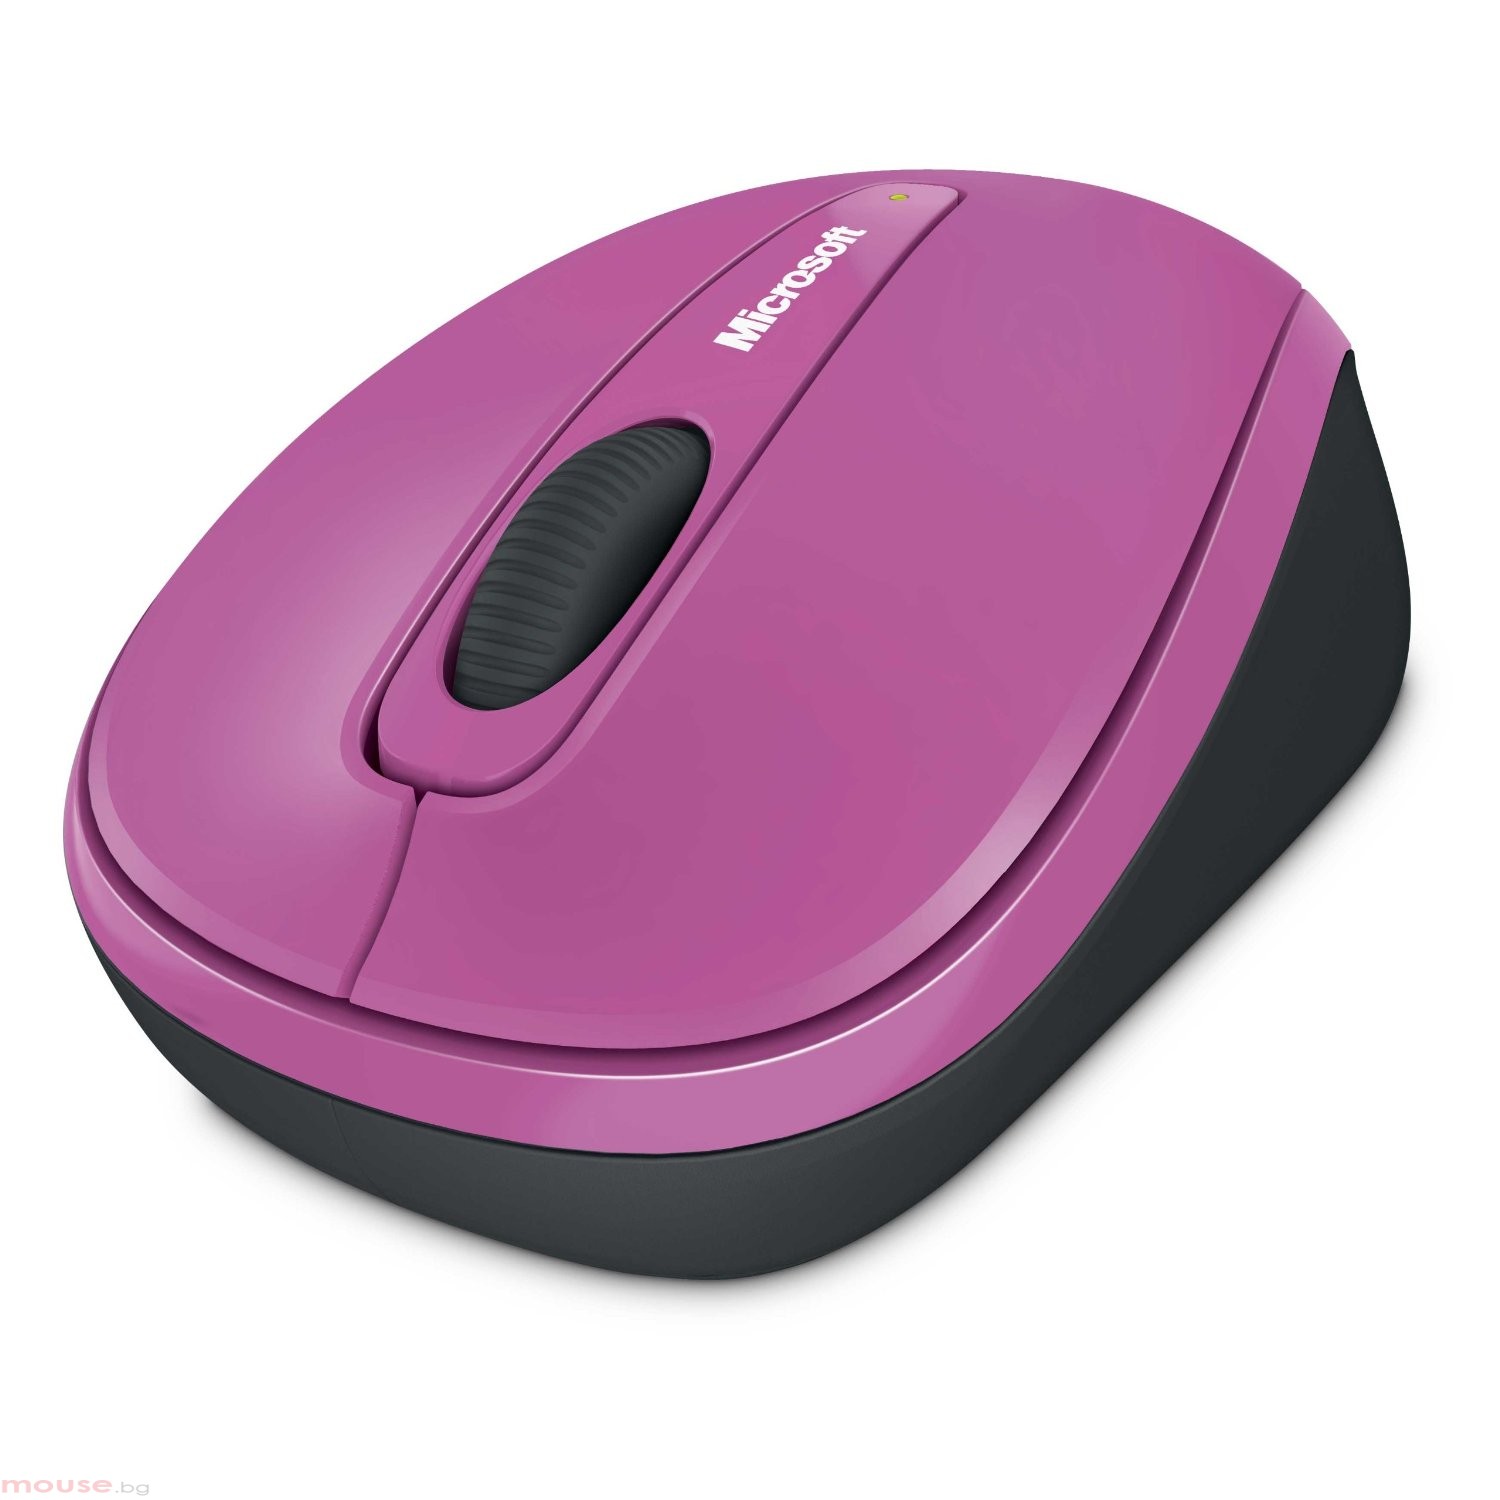 microsoft wireless mouse 3500 bluetooth